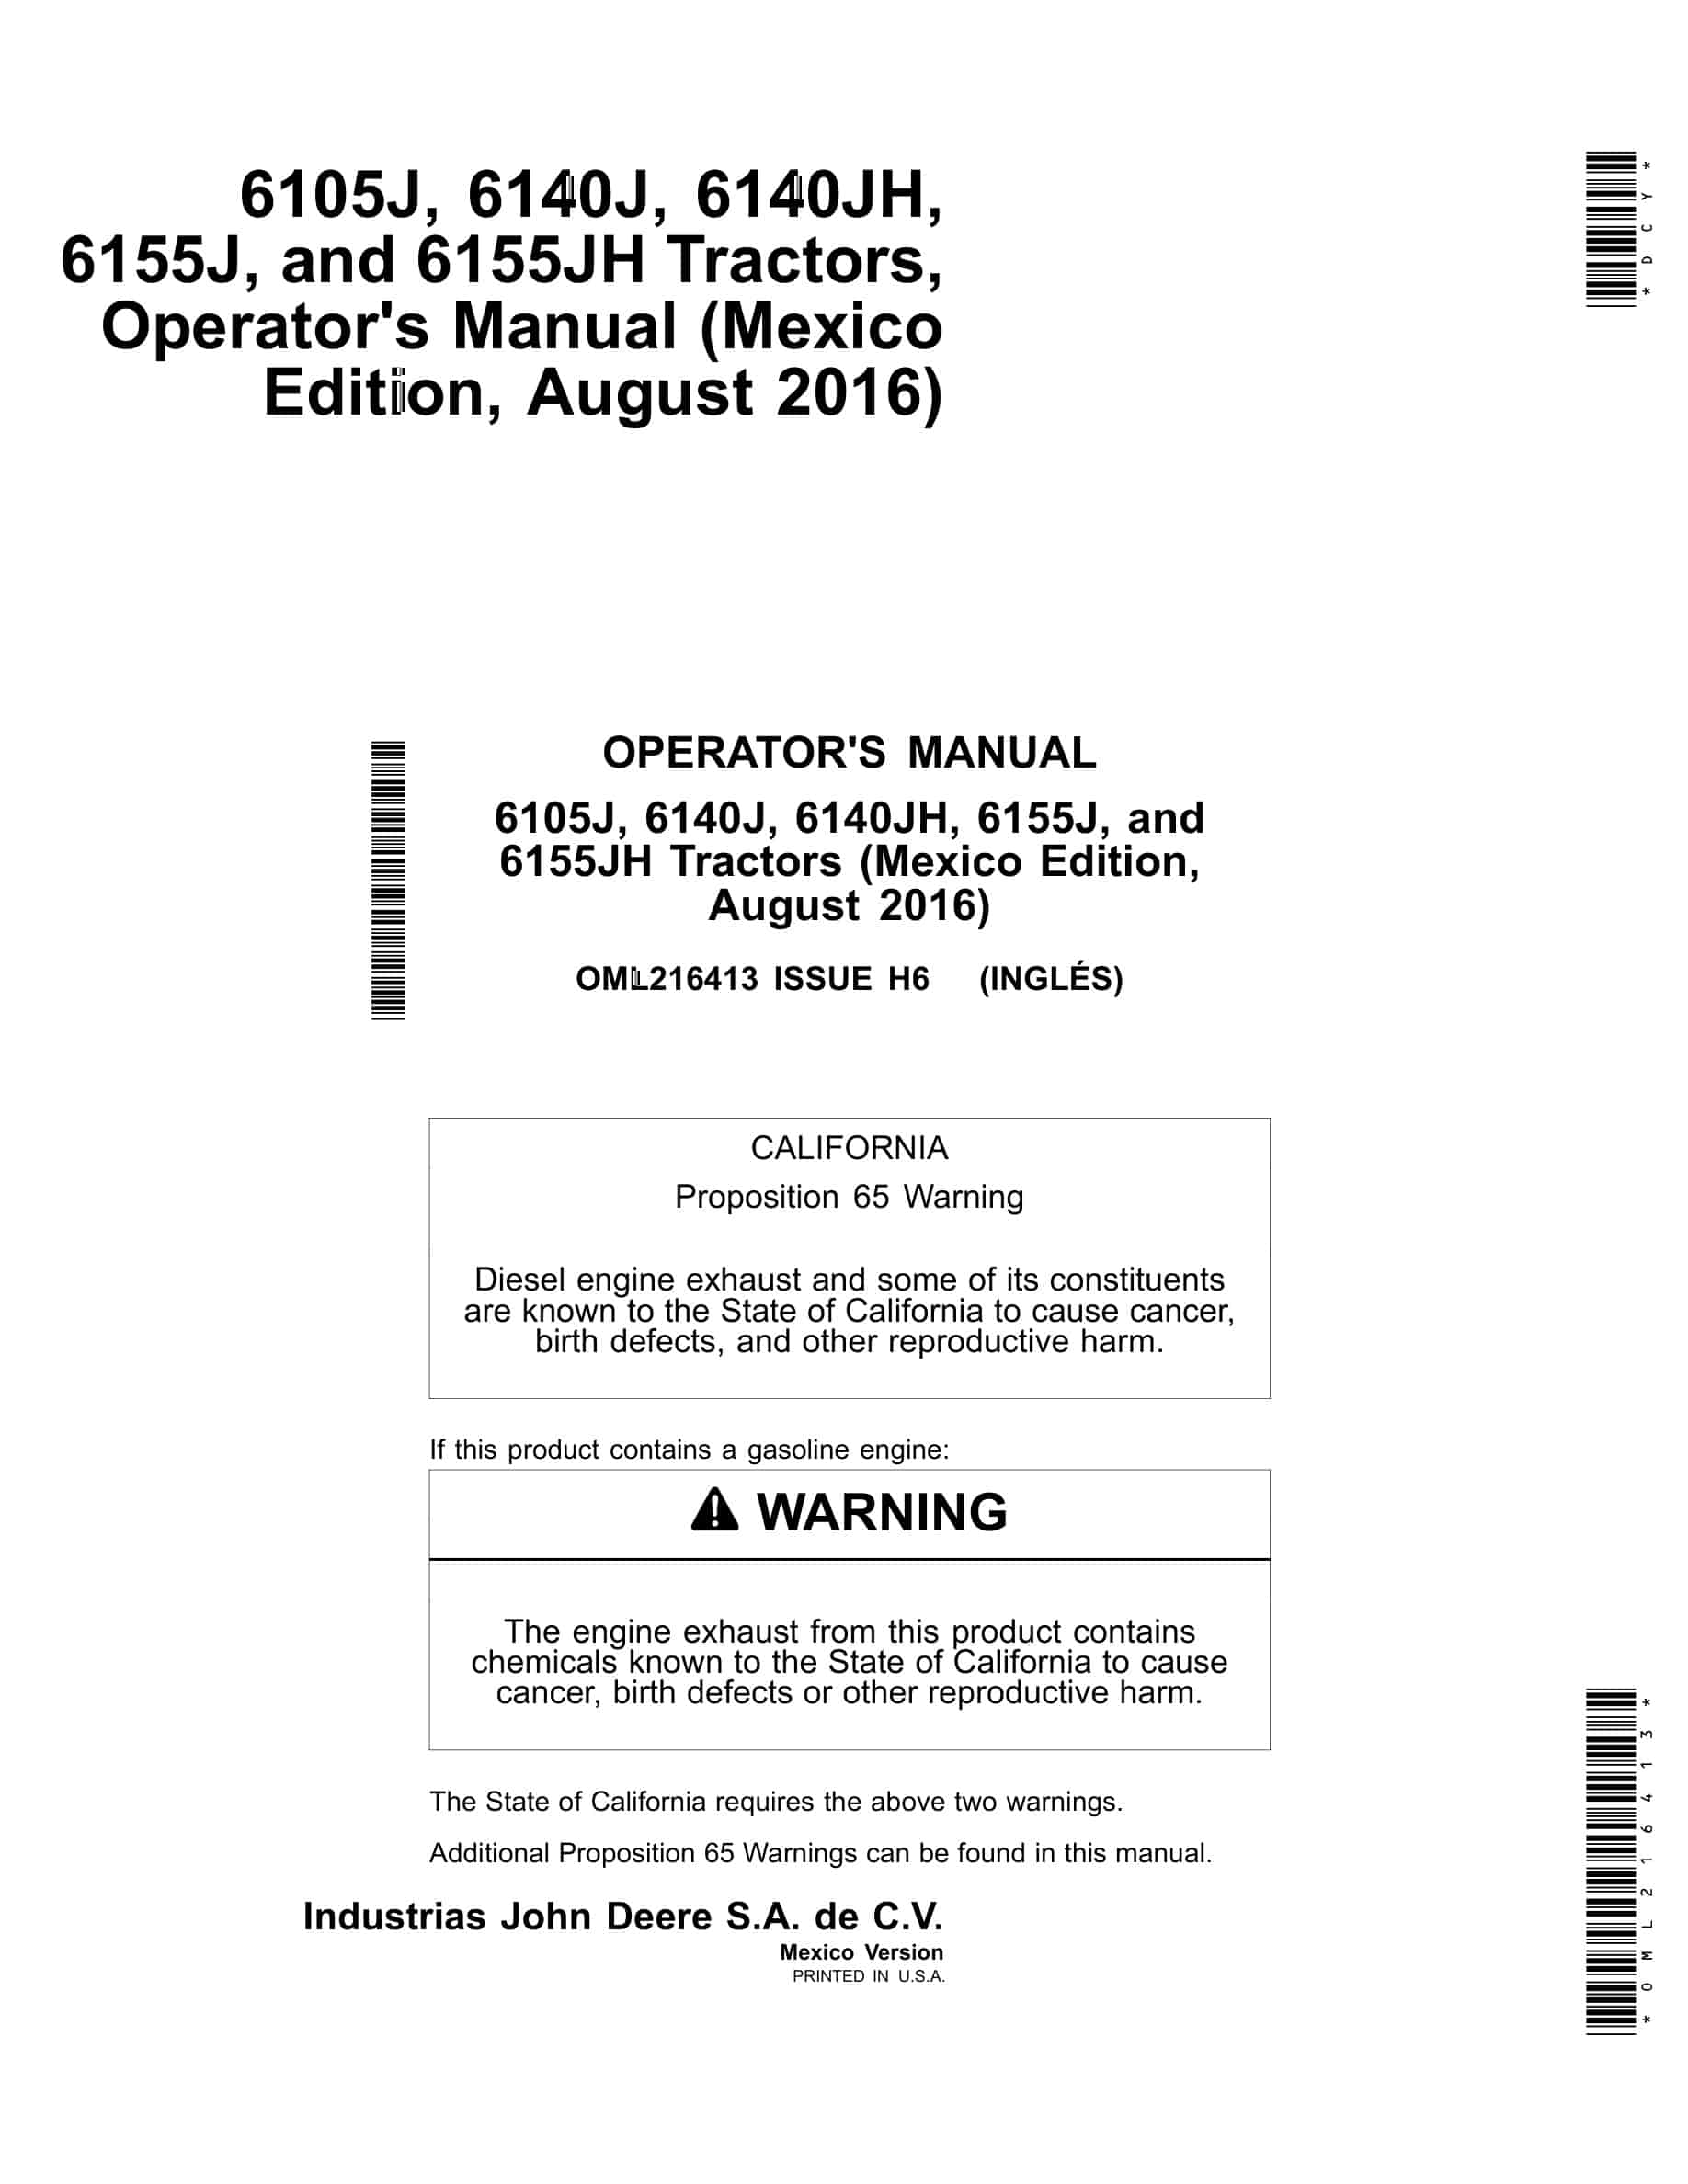 John Deere 6105j, 6140j, 6140jh, 6155j, And 6155jh Tractors Operator Manuals OML216413-1